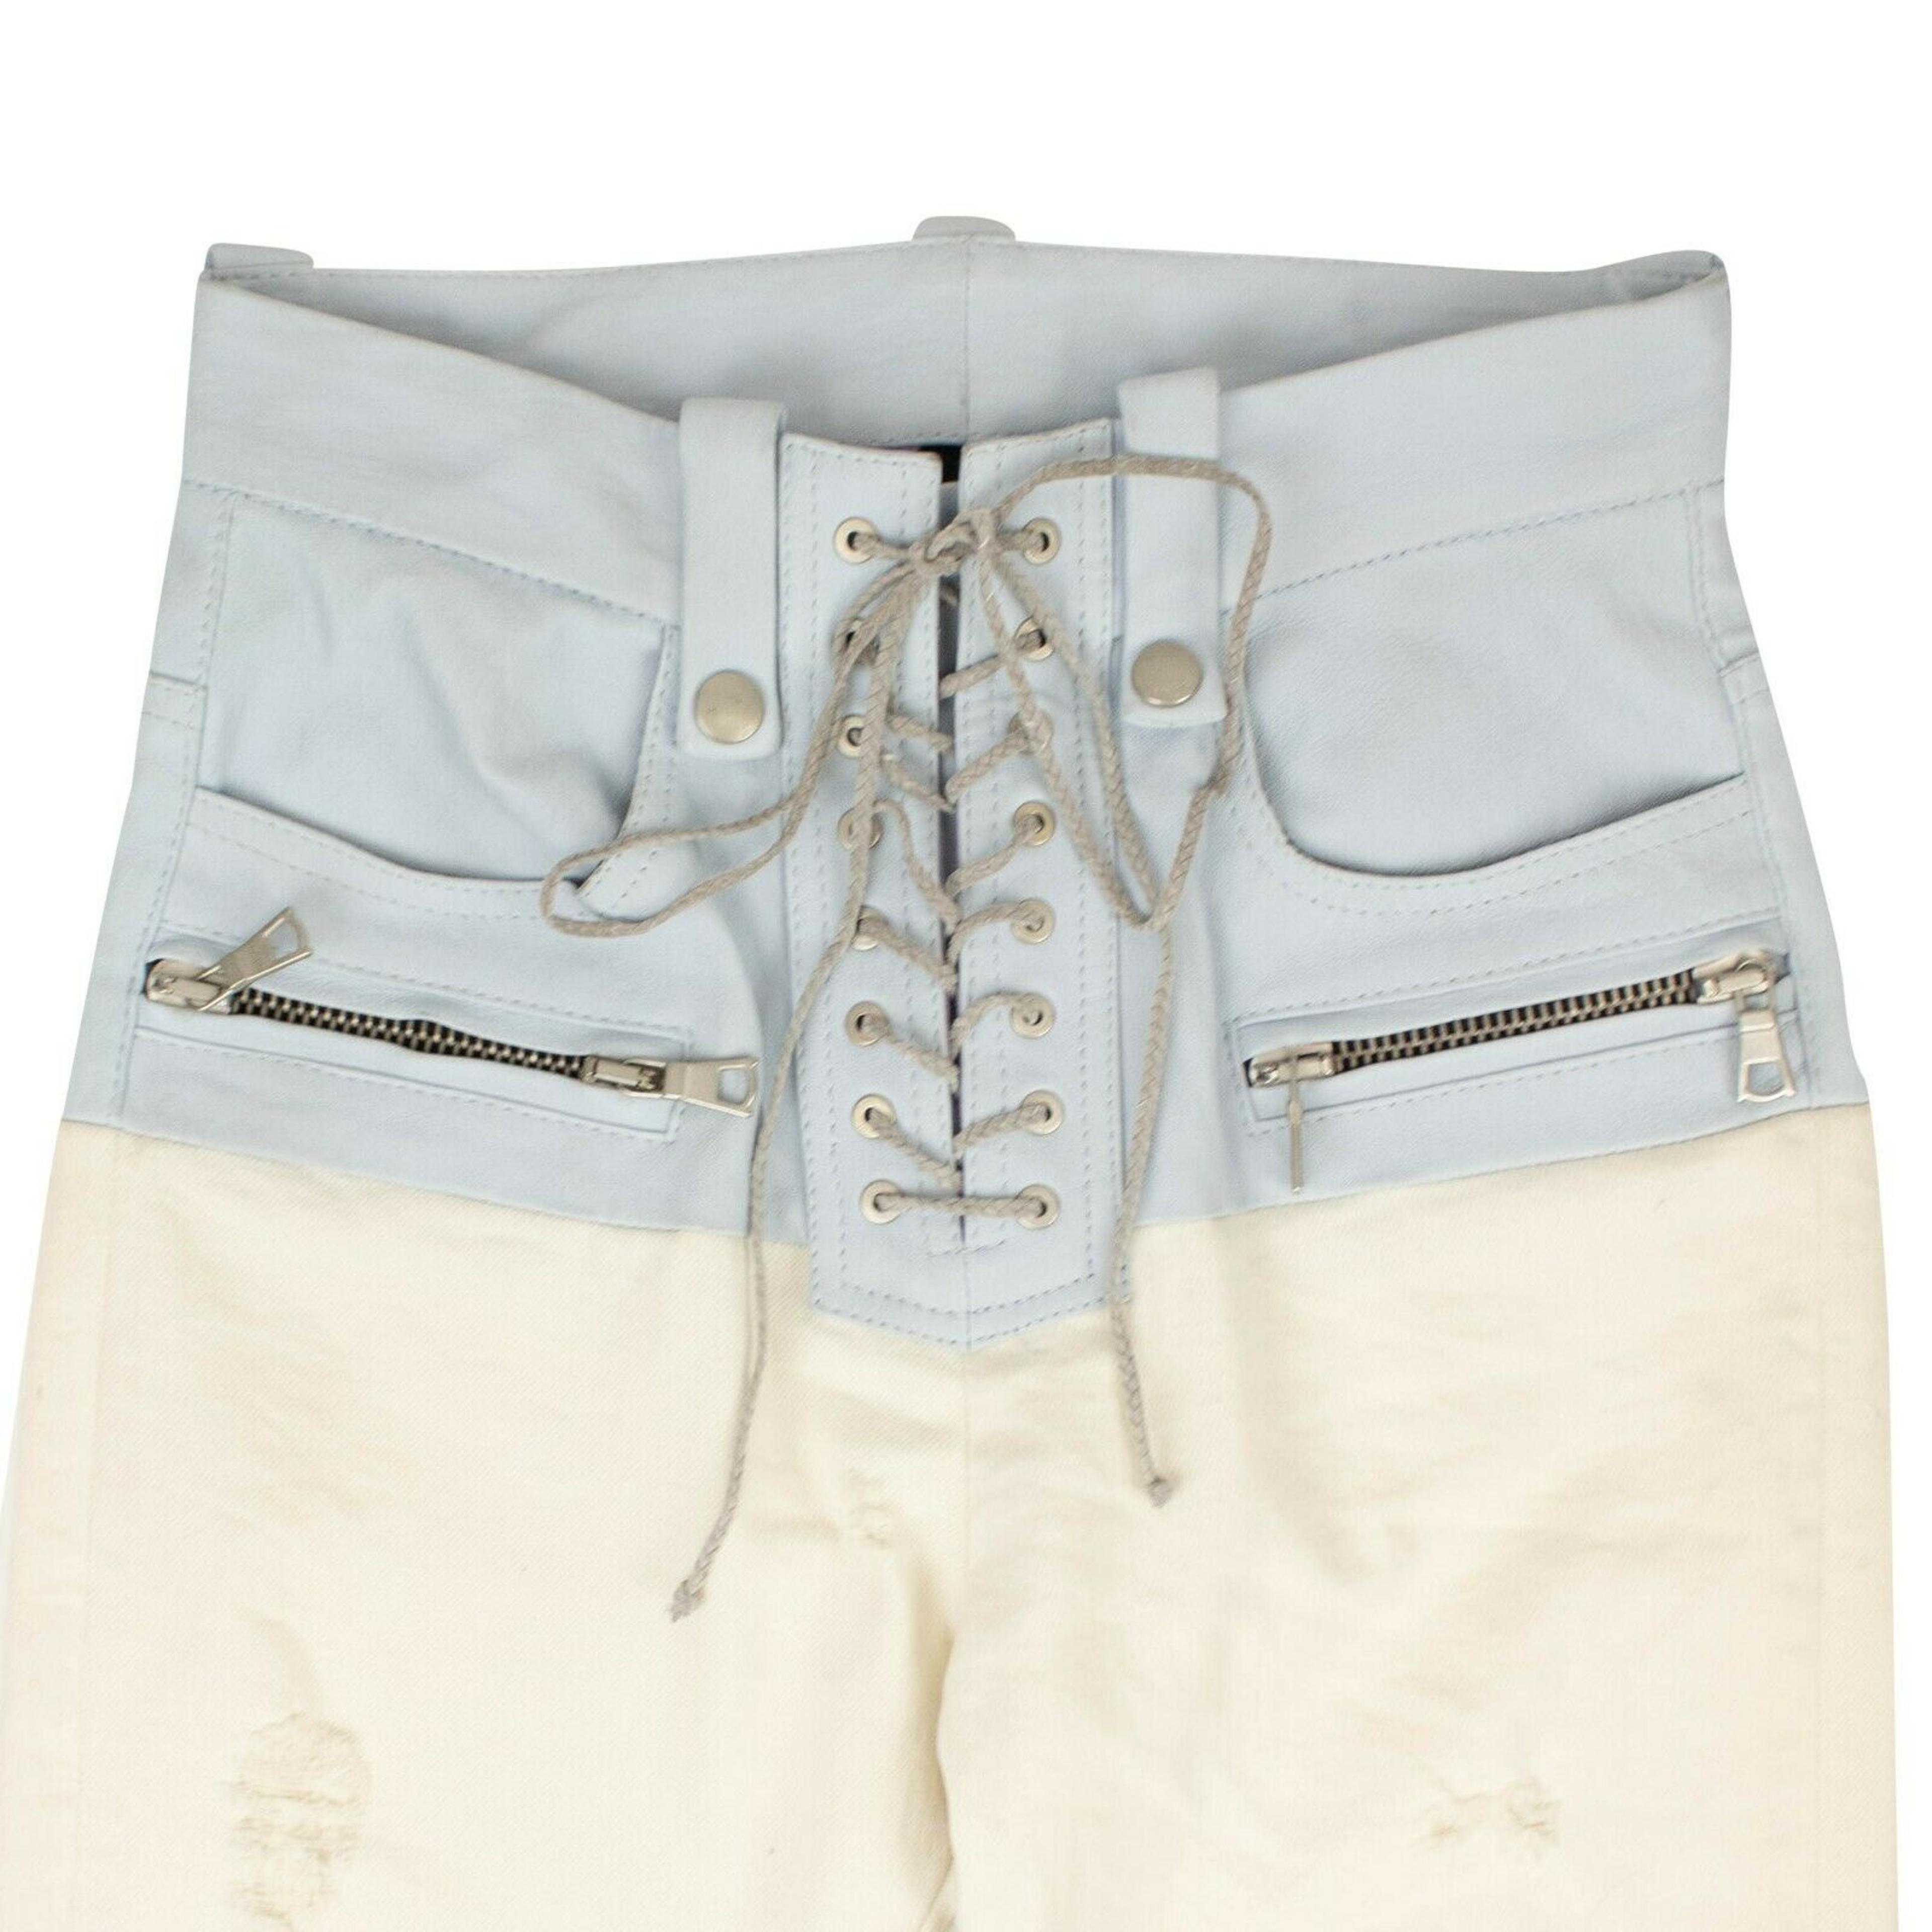 Alternate View 2 of White Denim Corset Jeans